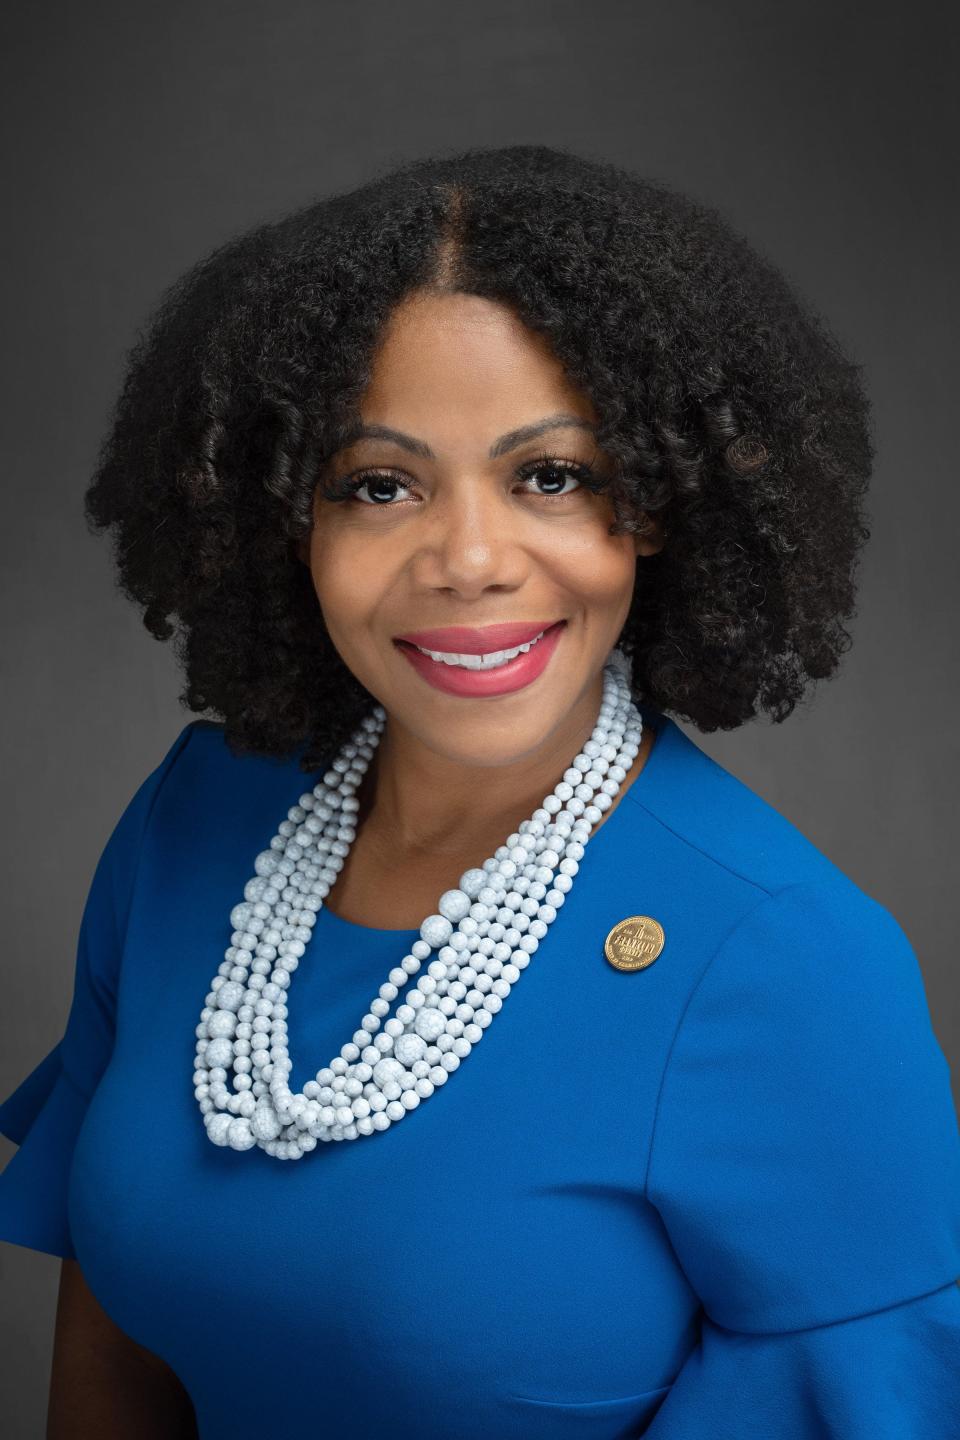 Franklin County Commissioner Erica Crawley, an incumbent Democrat